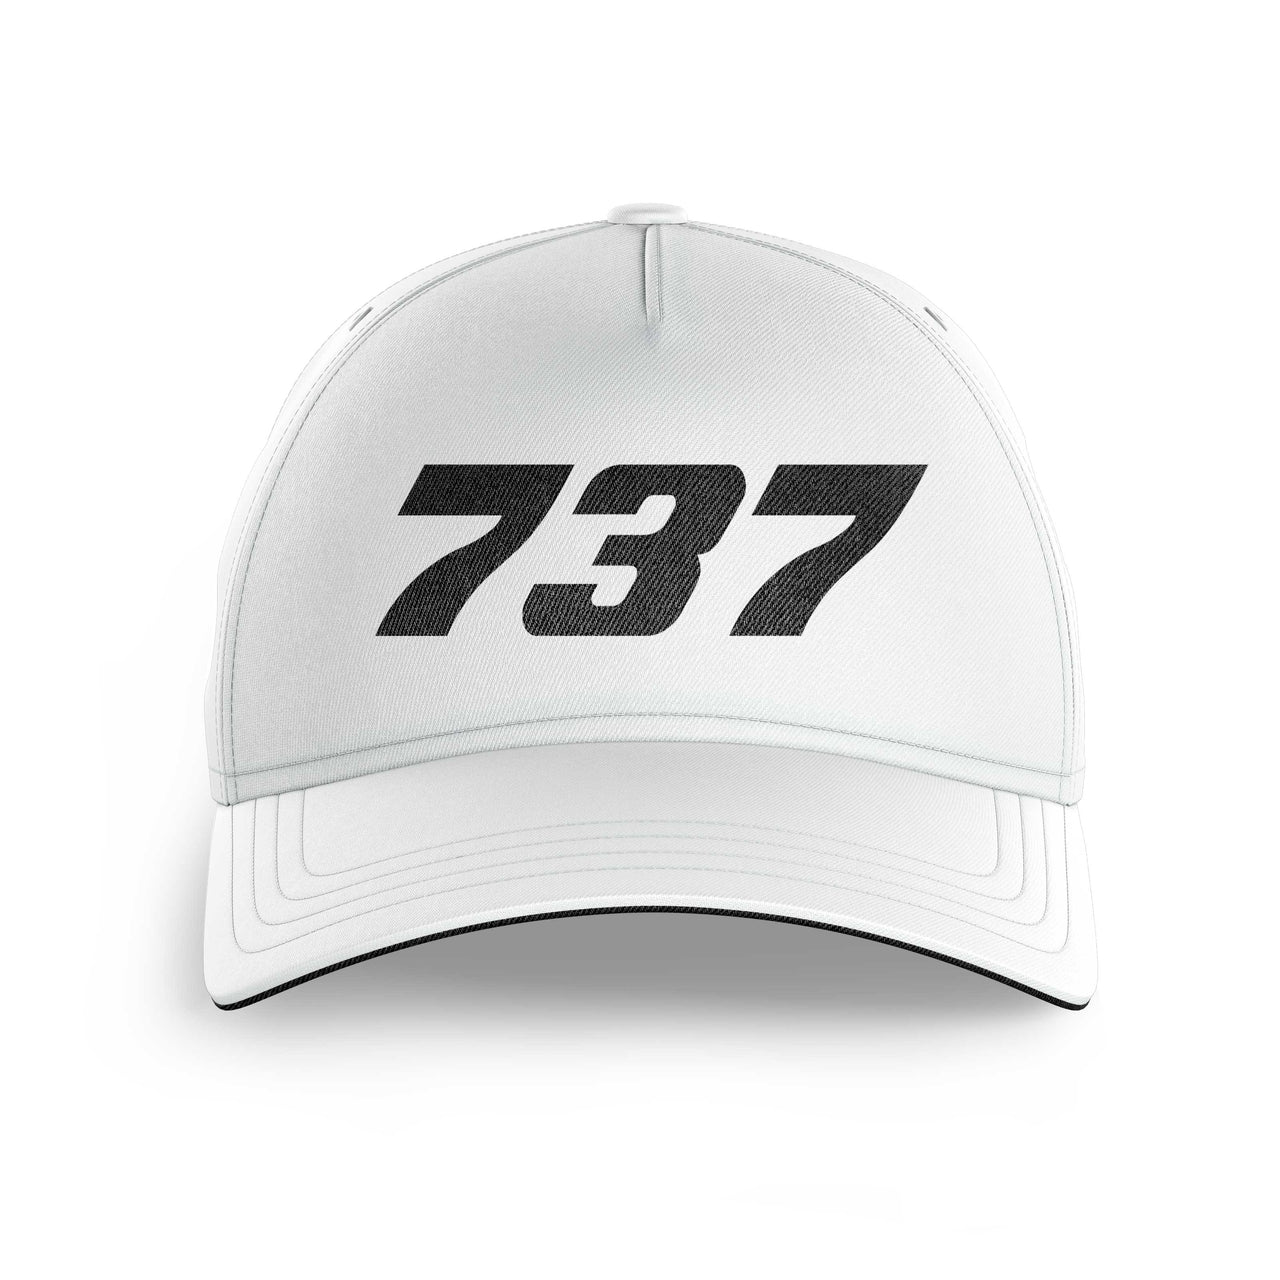 737 Flat Text Printed Hats